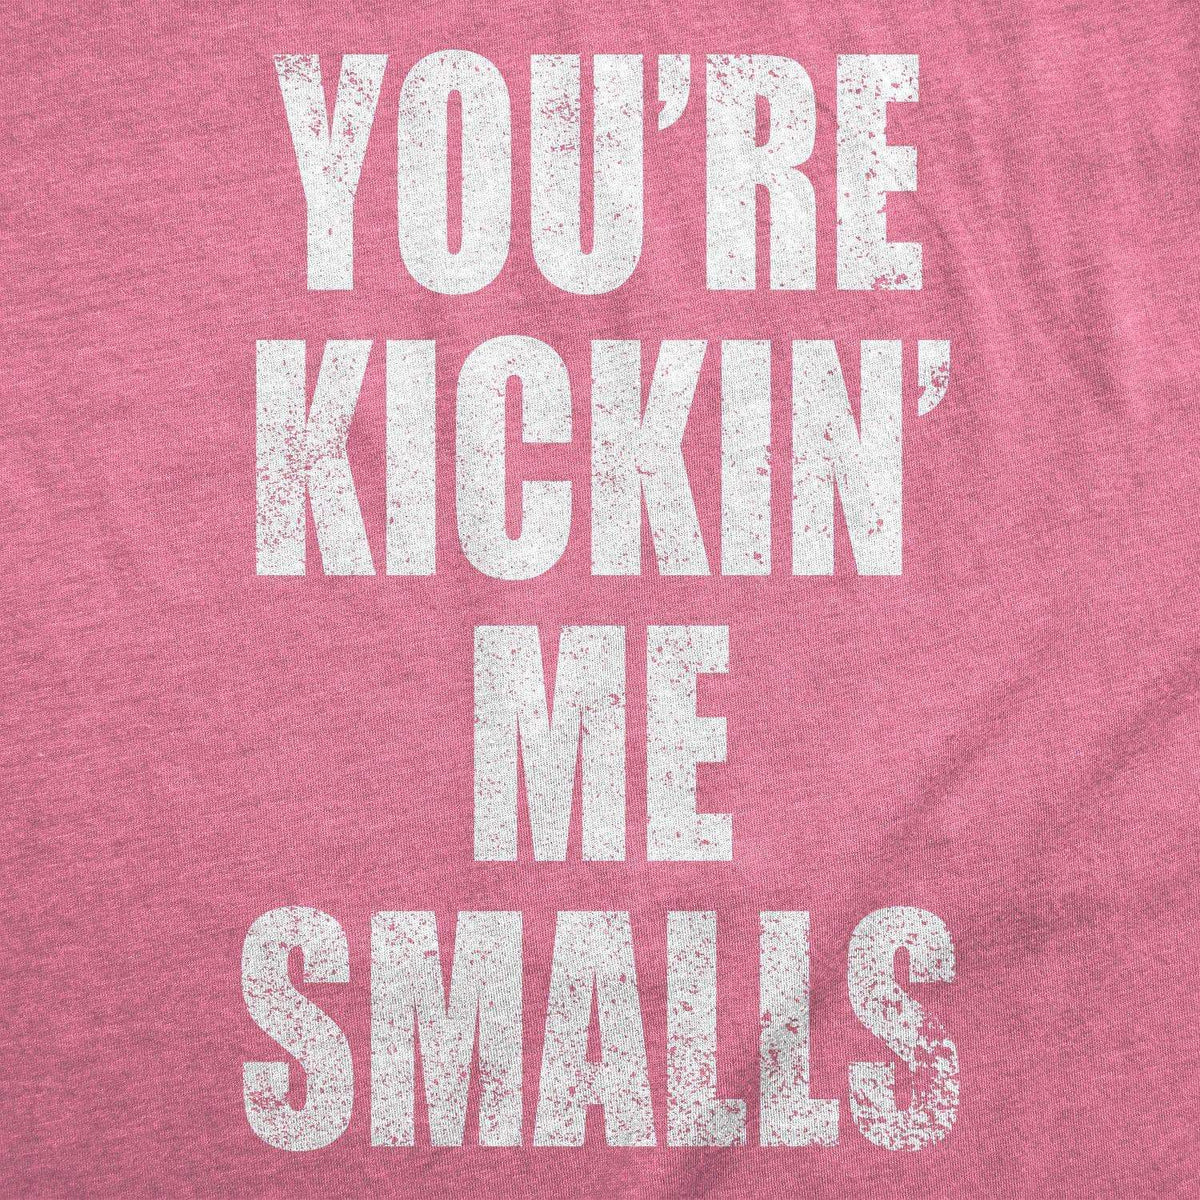 You&#39;re Kickin Me Smalls Maternity Tank Top  -  Crazy Dog T-Shirts